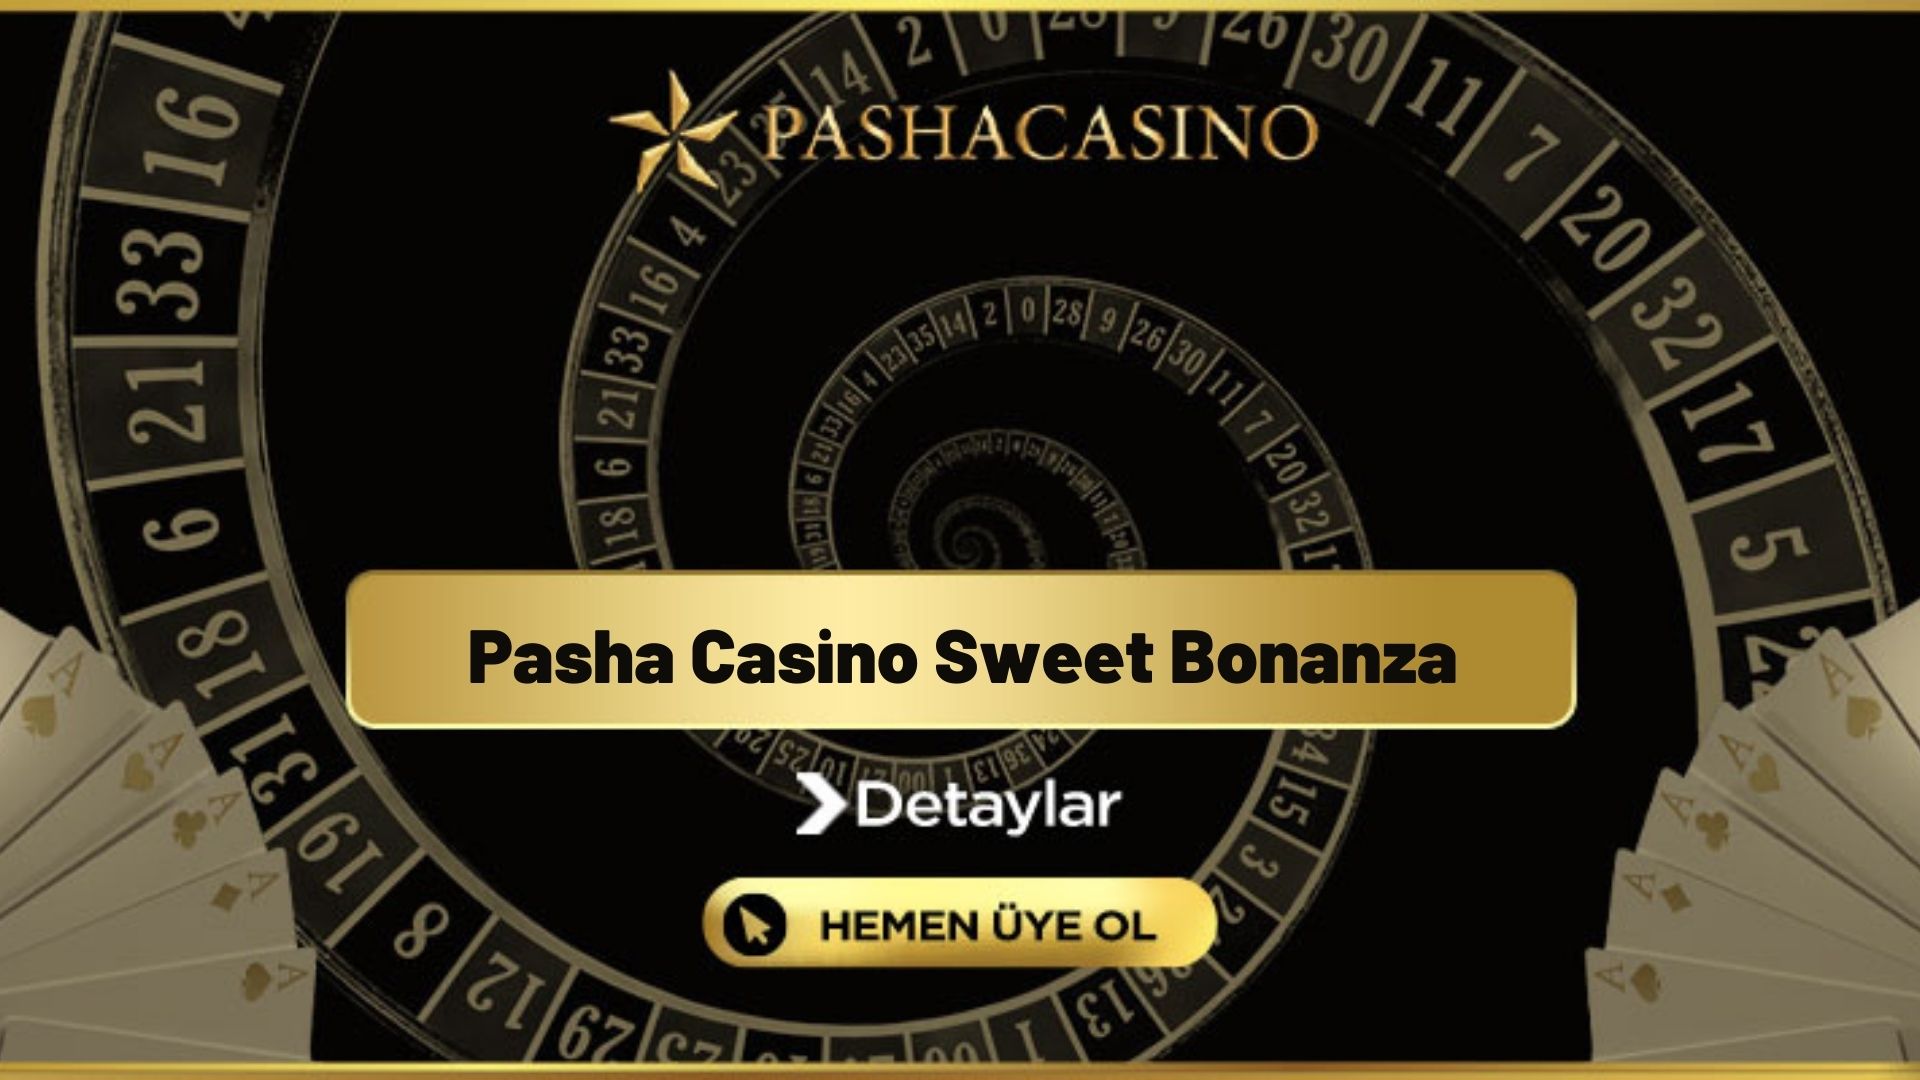 Pasha Casino Sweet Bonanza